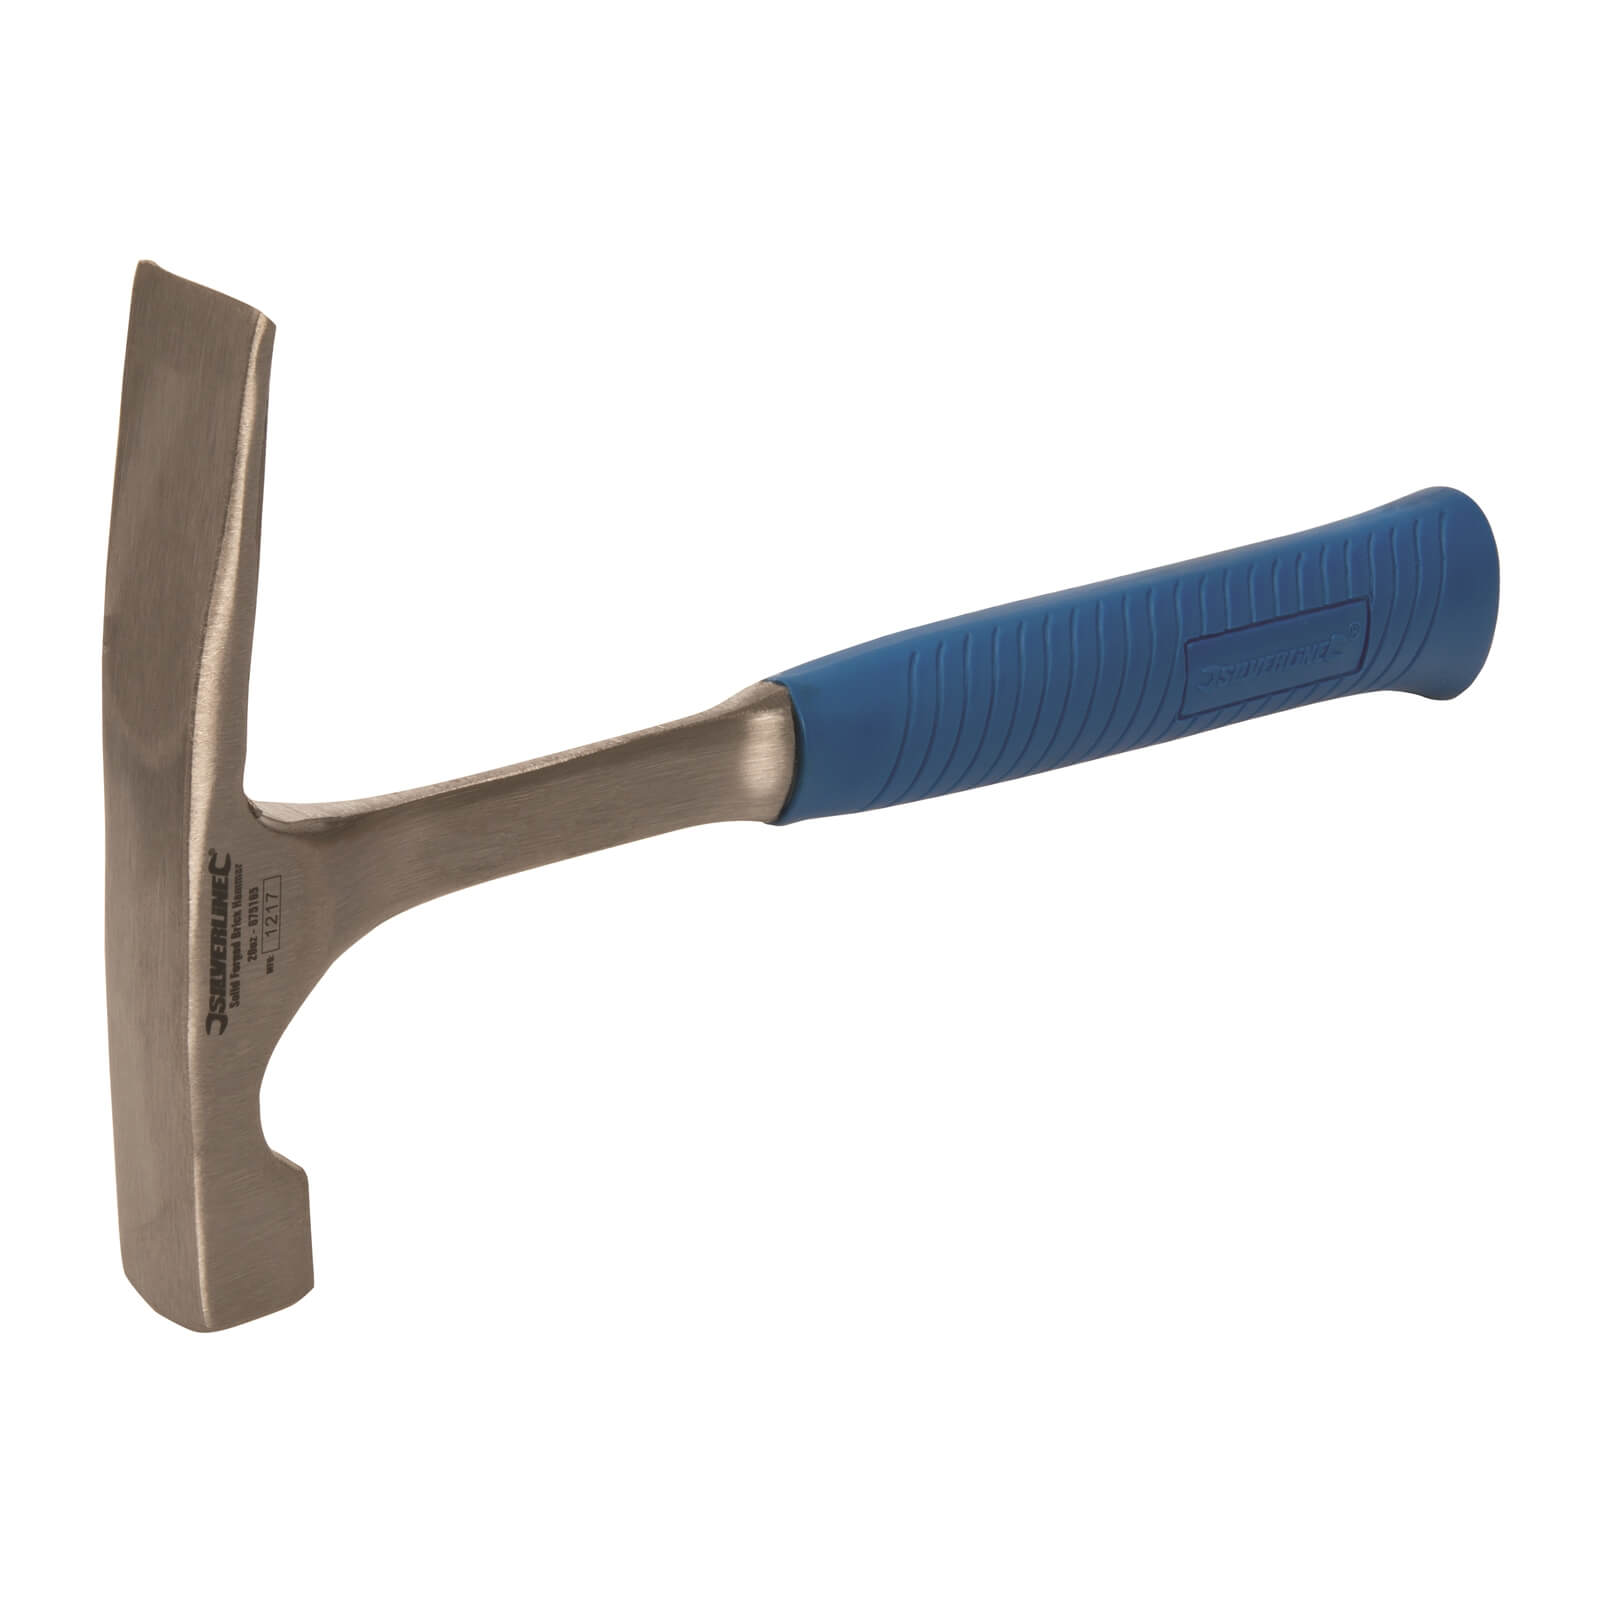 Silverline Solid Forged Brick Hammer - 20oz (567g)